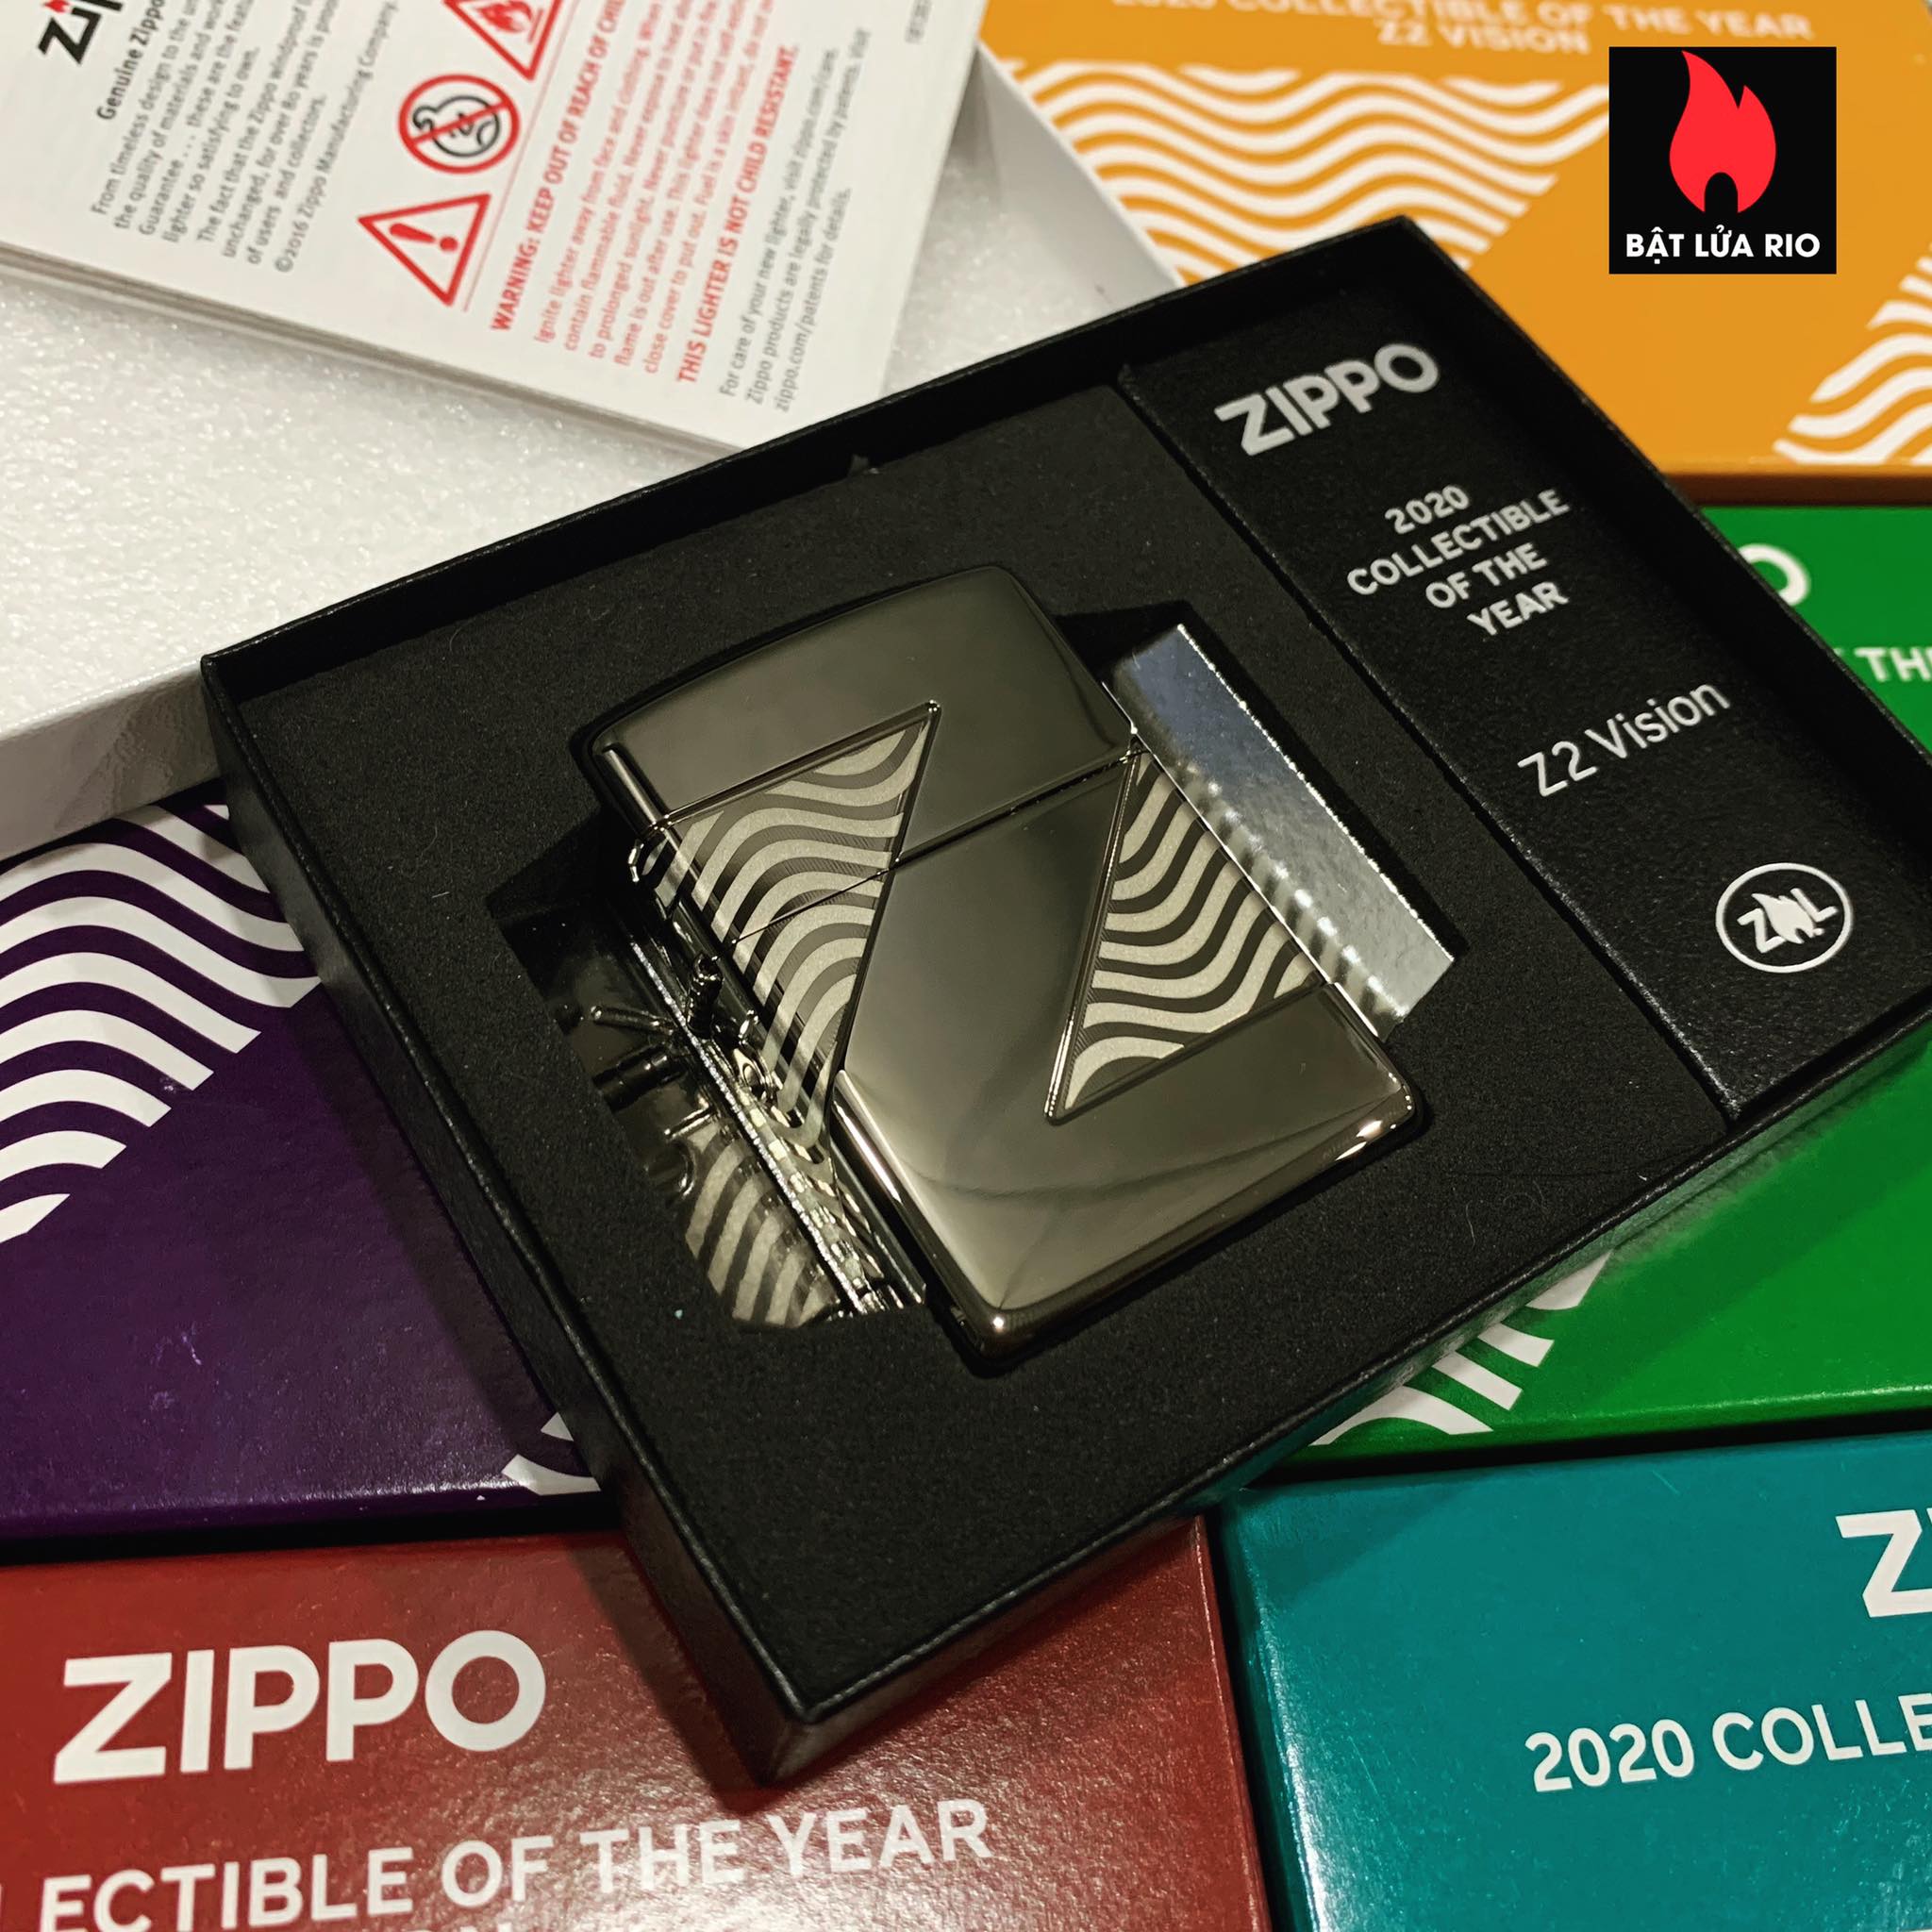 Zippo 49194 - Zippo 2020 Collectible Of The Year - Zippo Coty 2020 - Zippo Z2 Vision 23